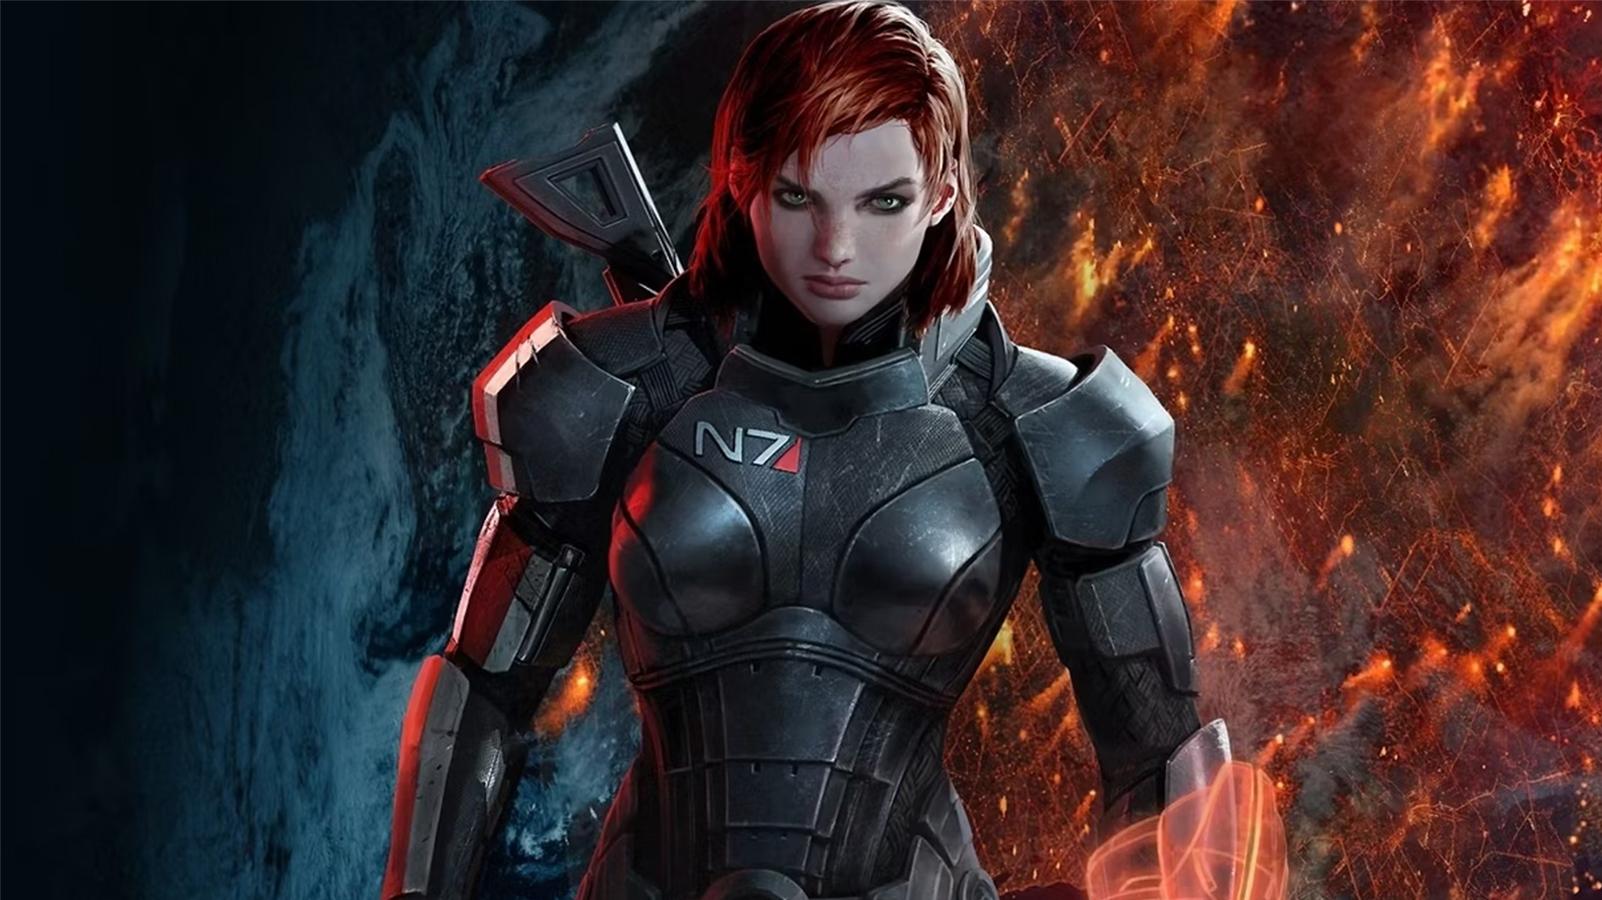 Mass Effect FemShep cover art